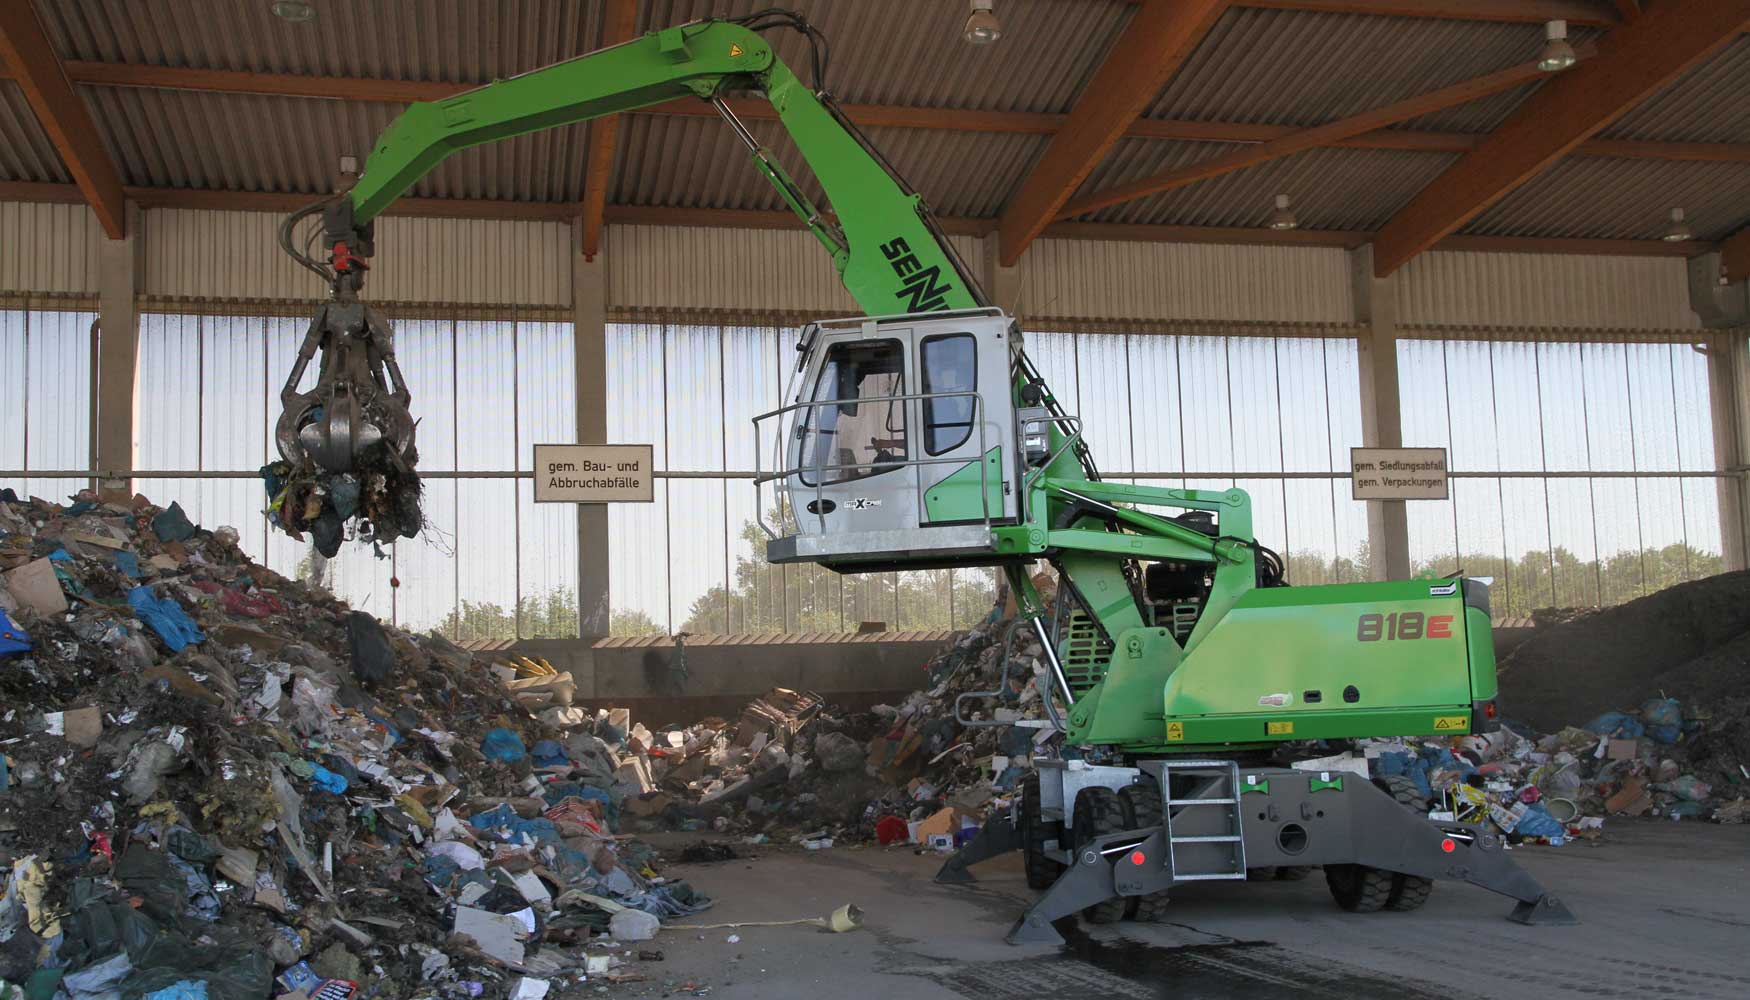 Schlter Baumaschinen GmbH entreg dos nuevas excavadoras de manipulacin Sennebogen 818 a la gestora de residuos Entsorgungswirtschaft Soest GmbH...